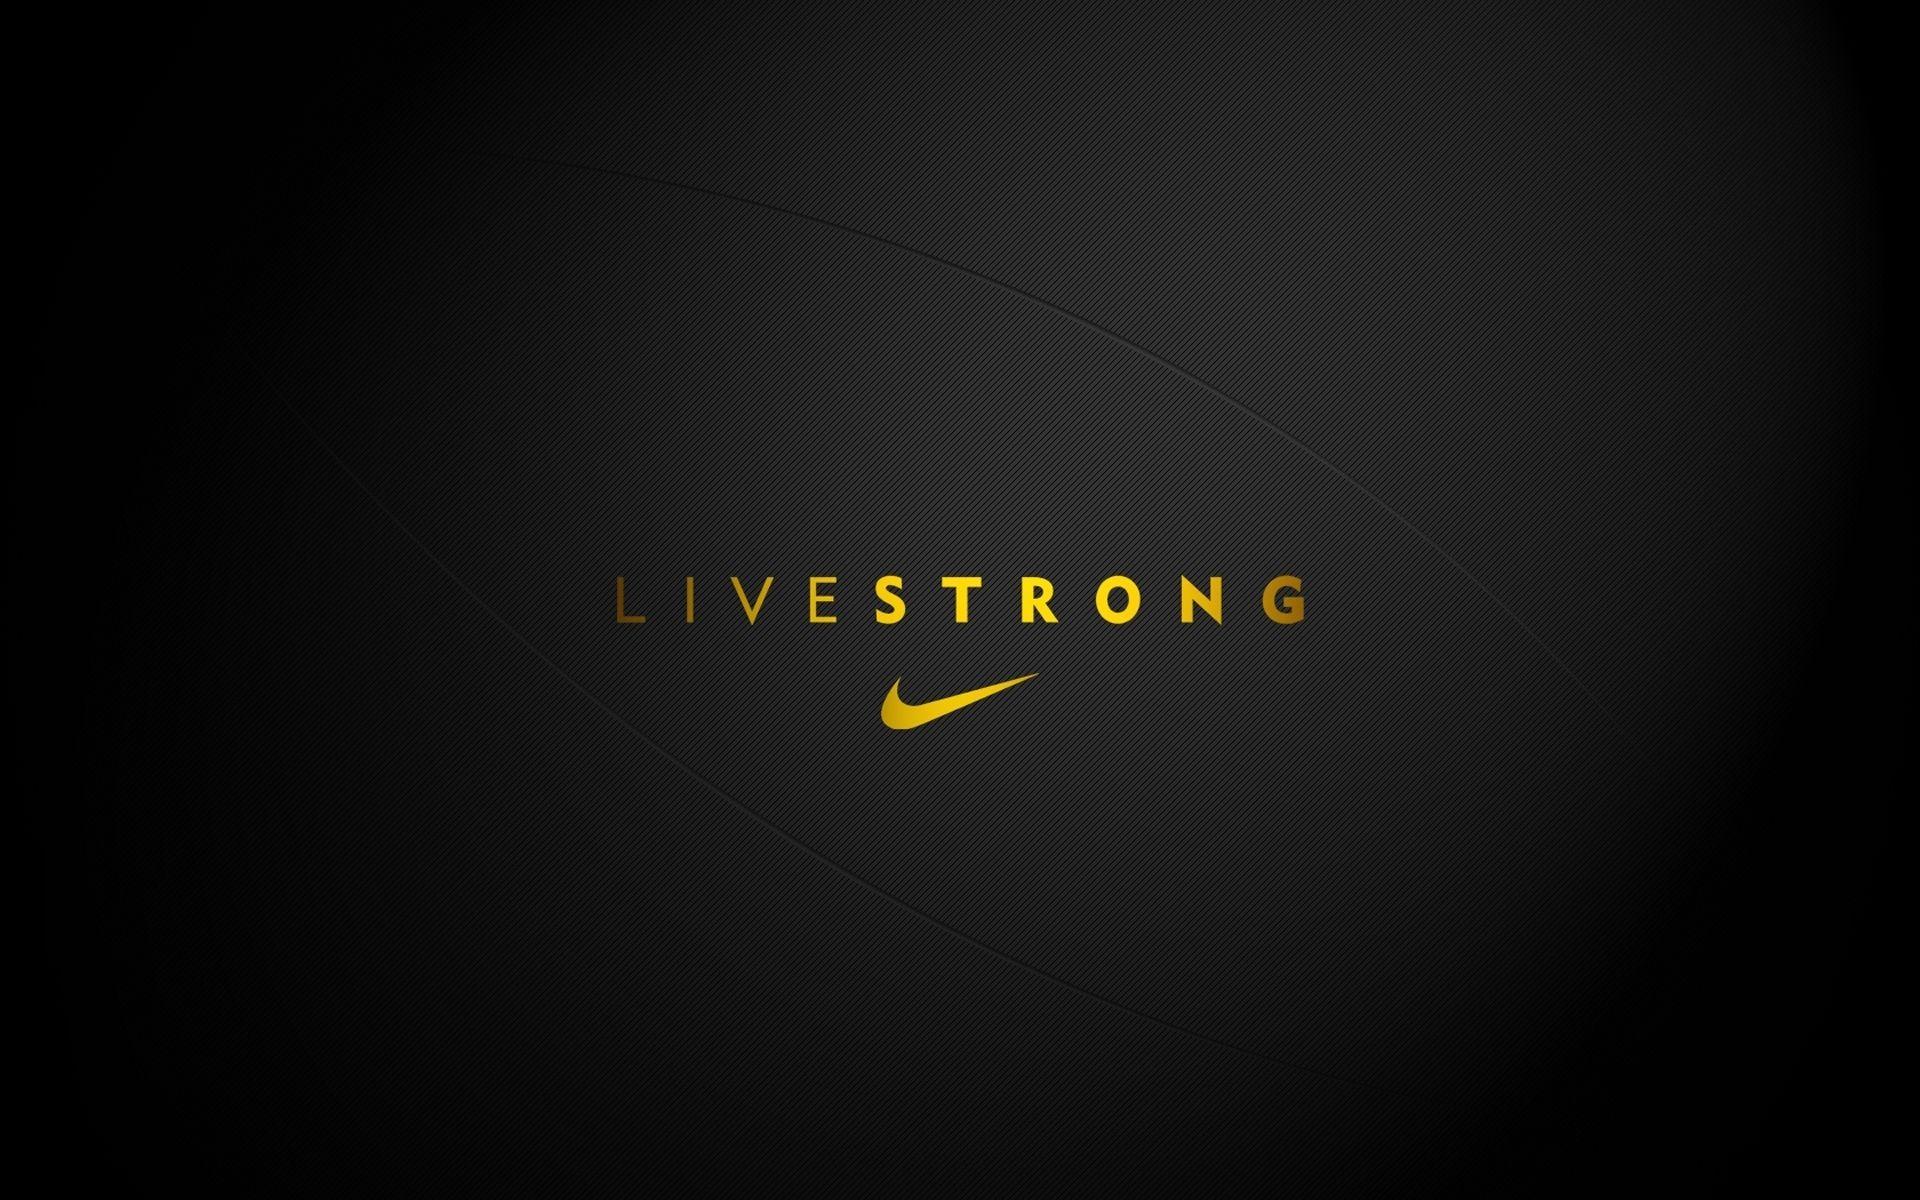 Live STRONG Logo - Free Photo Livestrong, Brand, Logo, Nike, Best, Hi Tech, Hi Tech